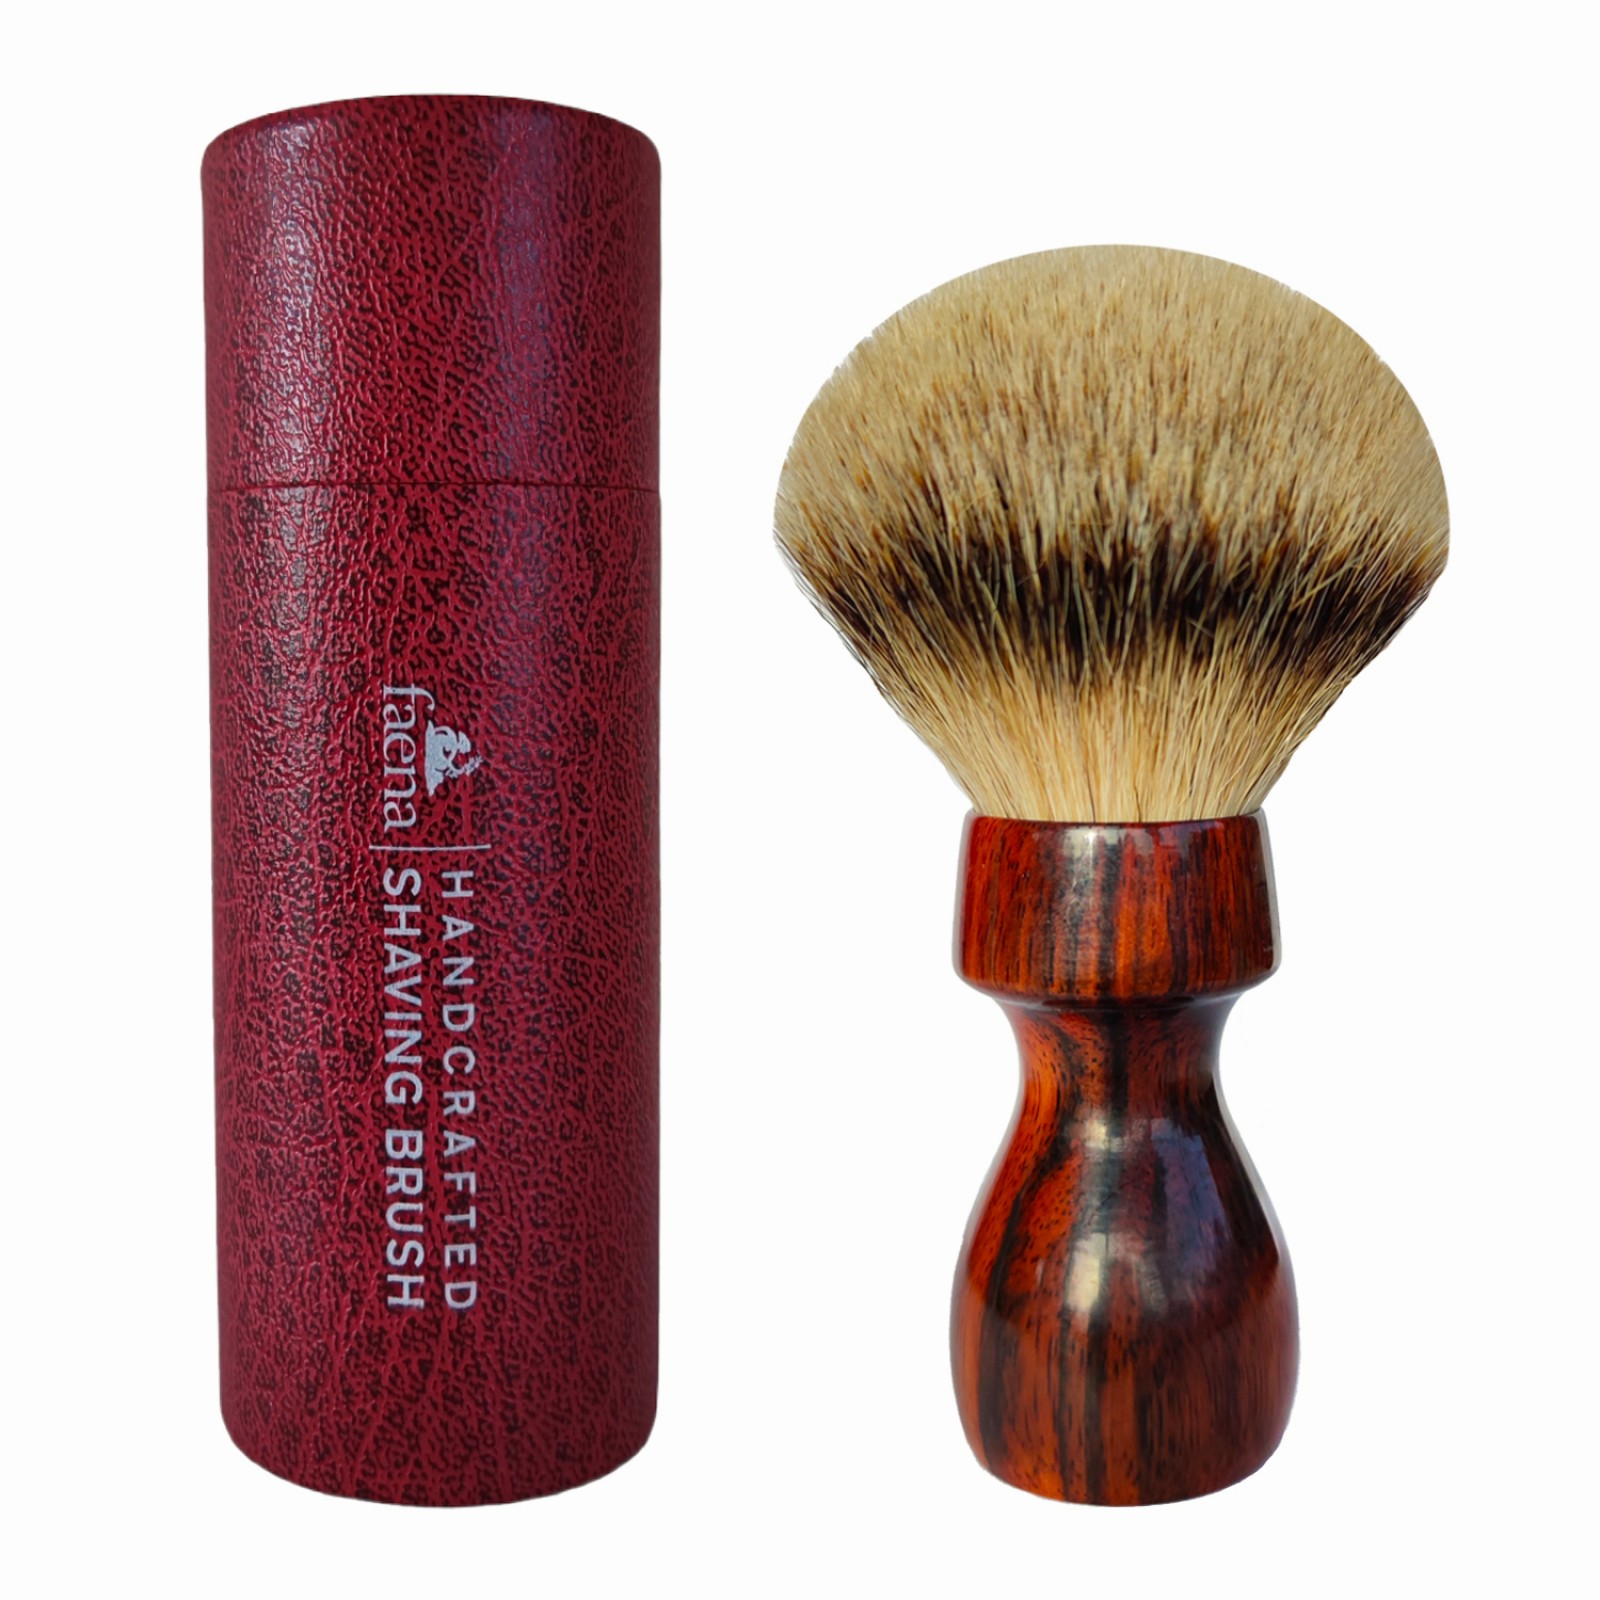 Macassar ebony wood shaving brush with 24mm silvertip knot